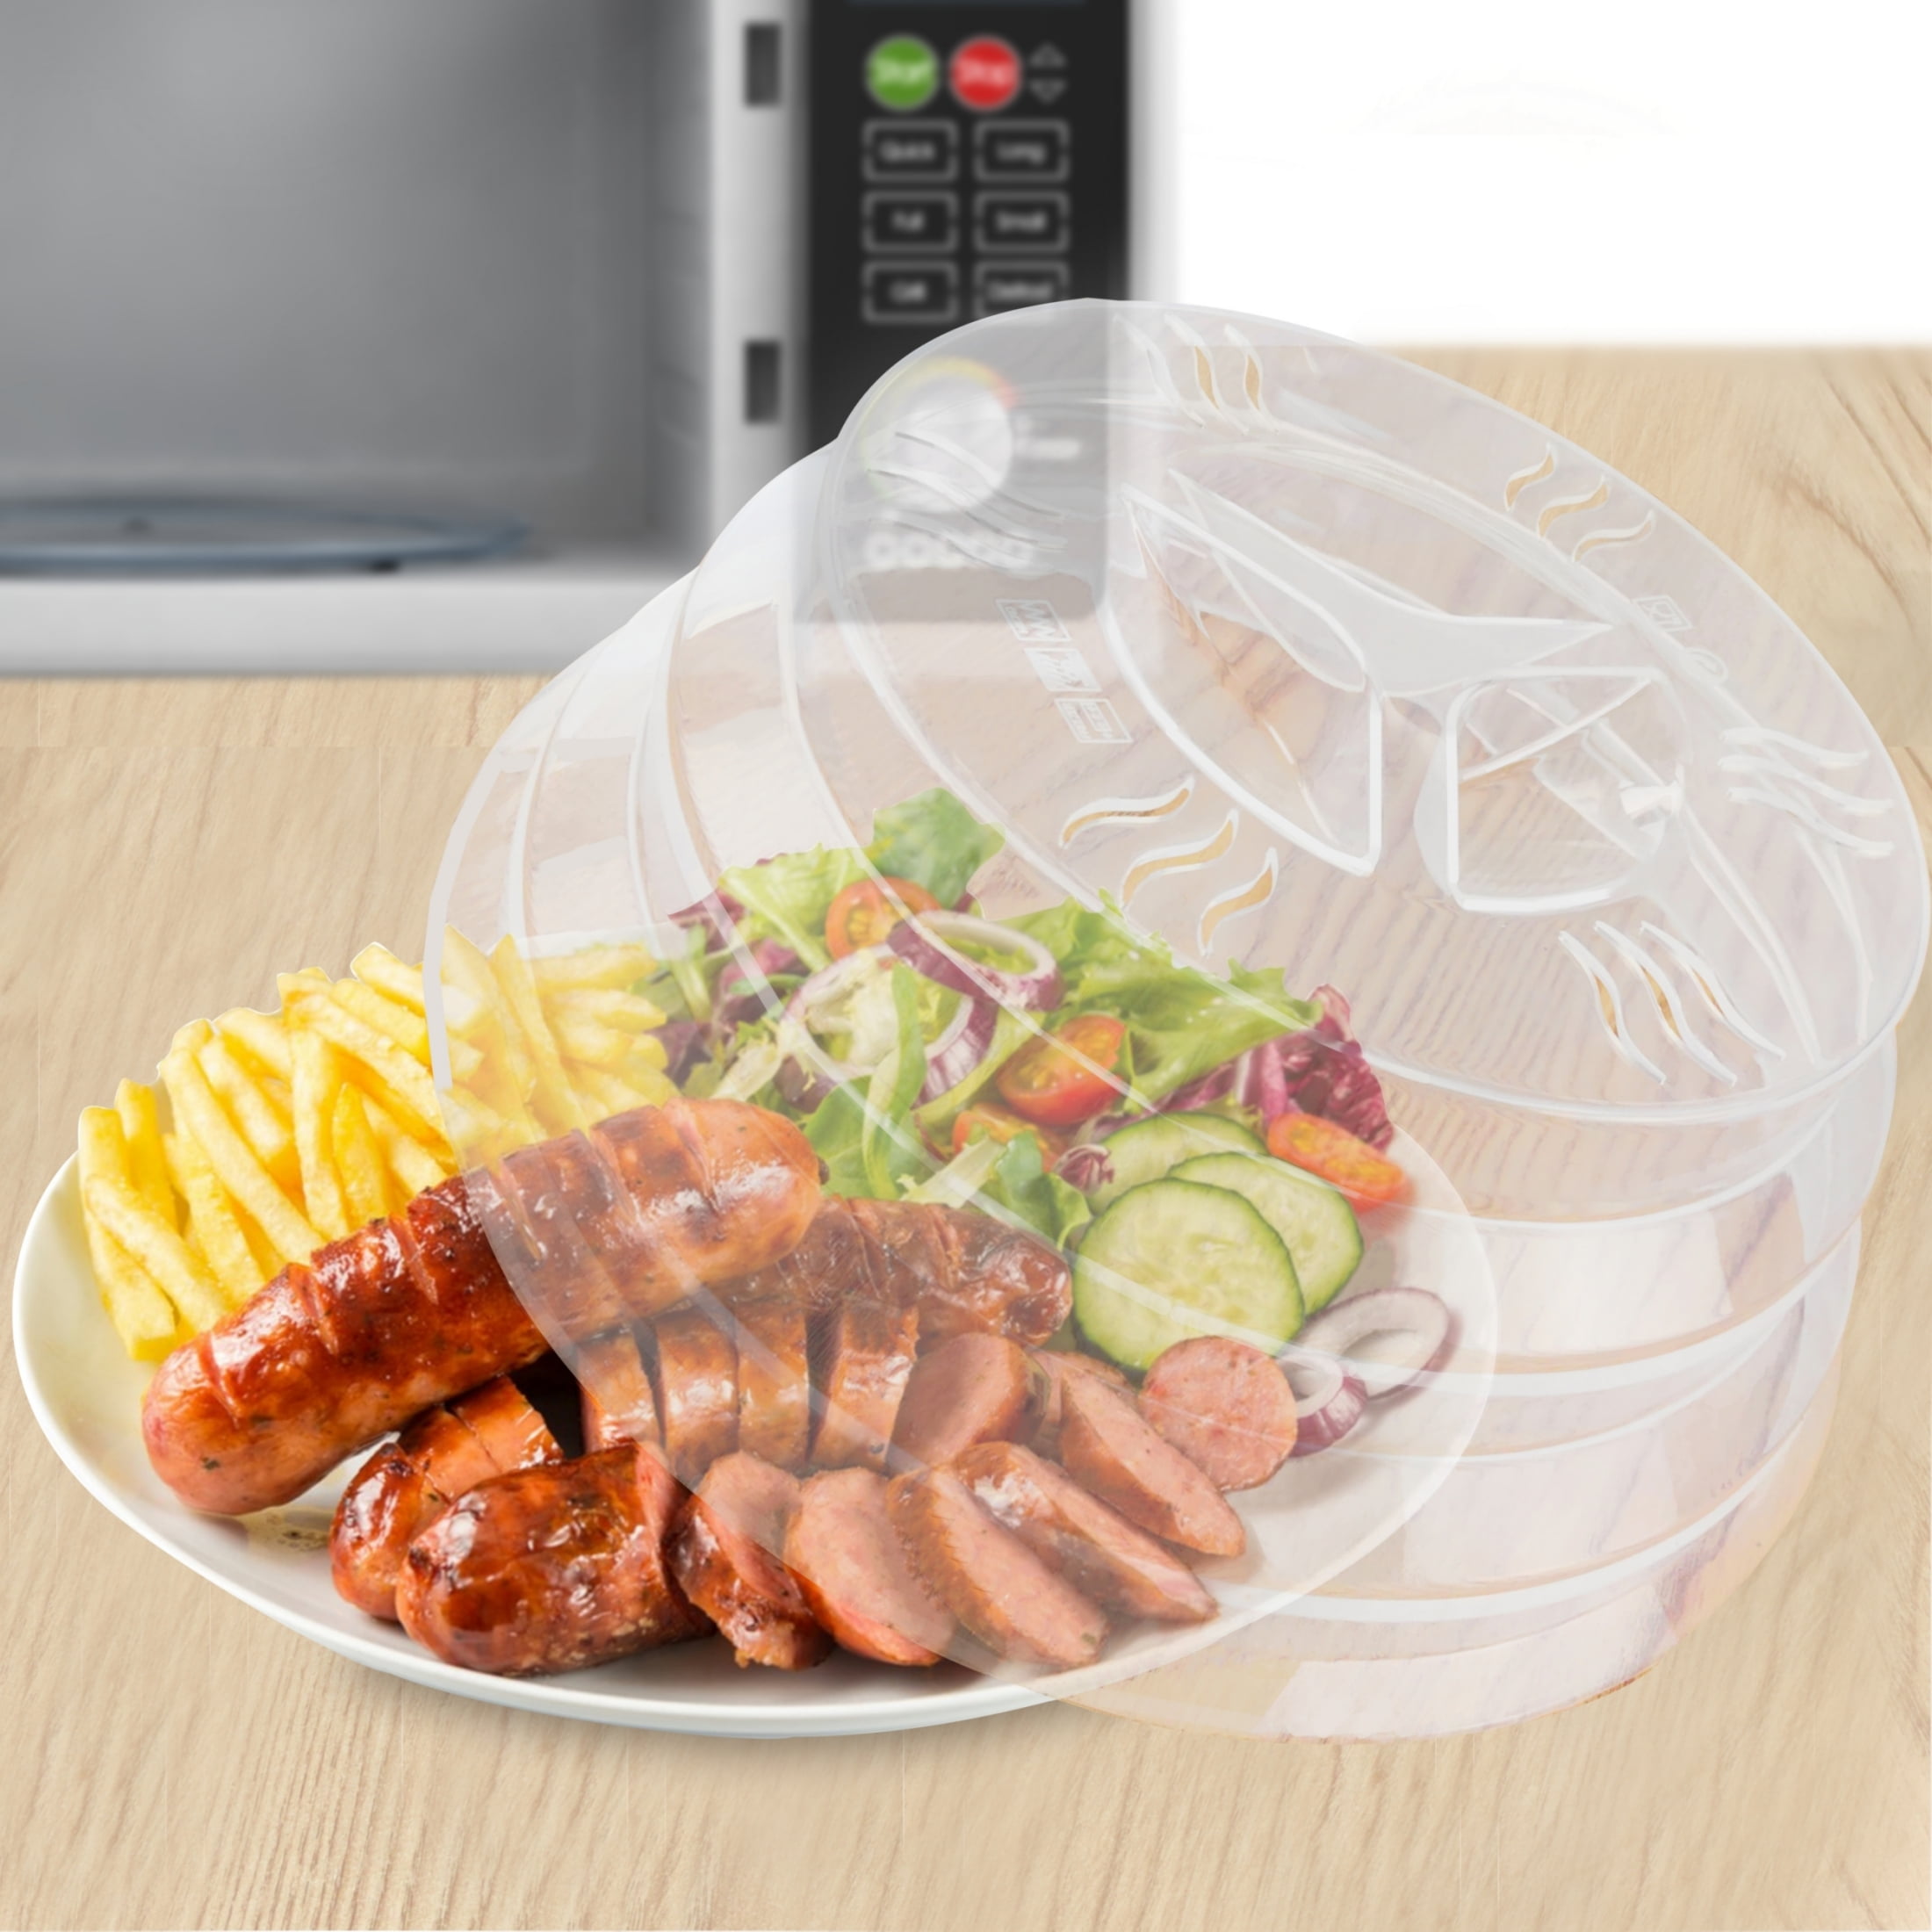 Gracenal Microwave Cover for Food – Combler